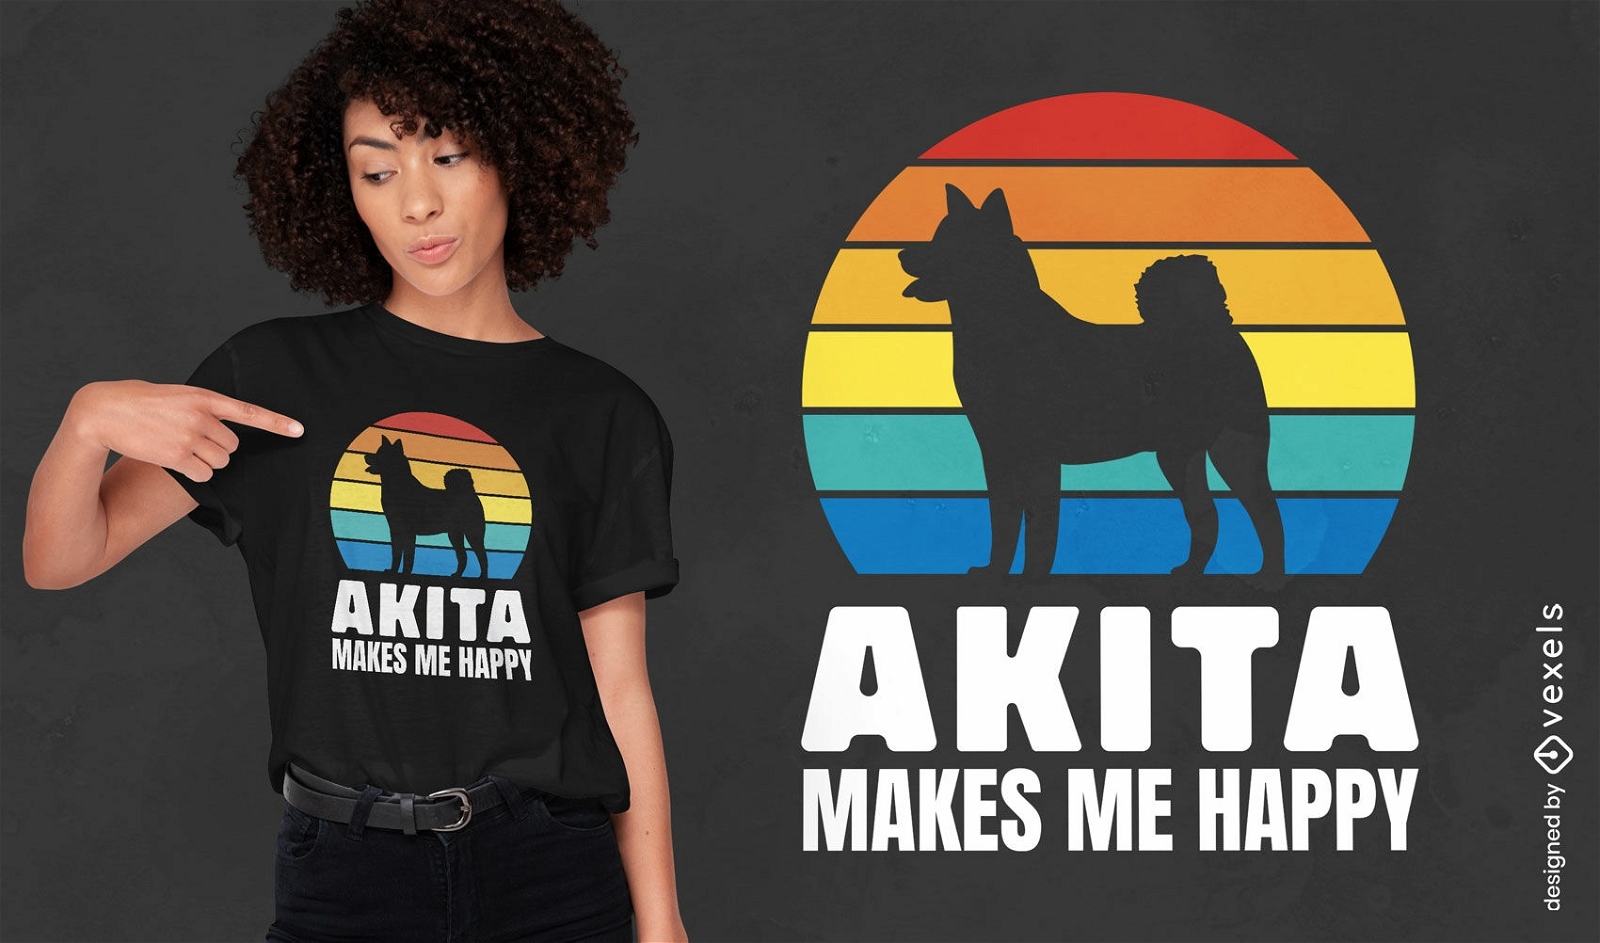 Akita makes me happy dog t-shirt design